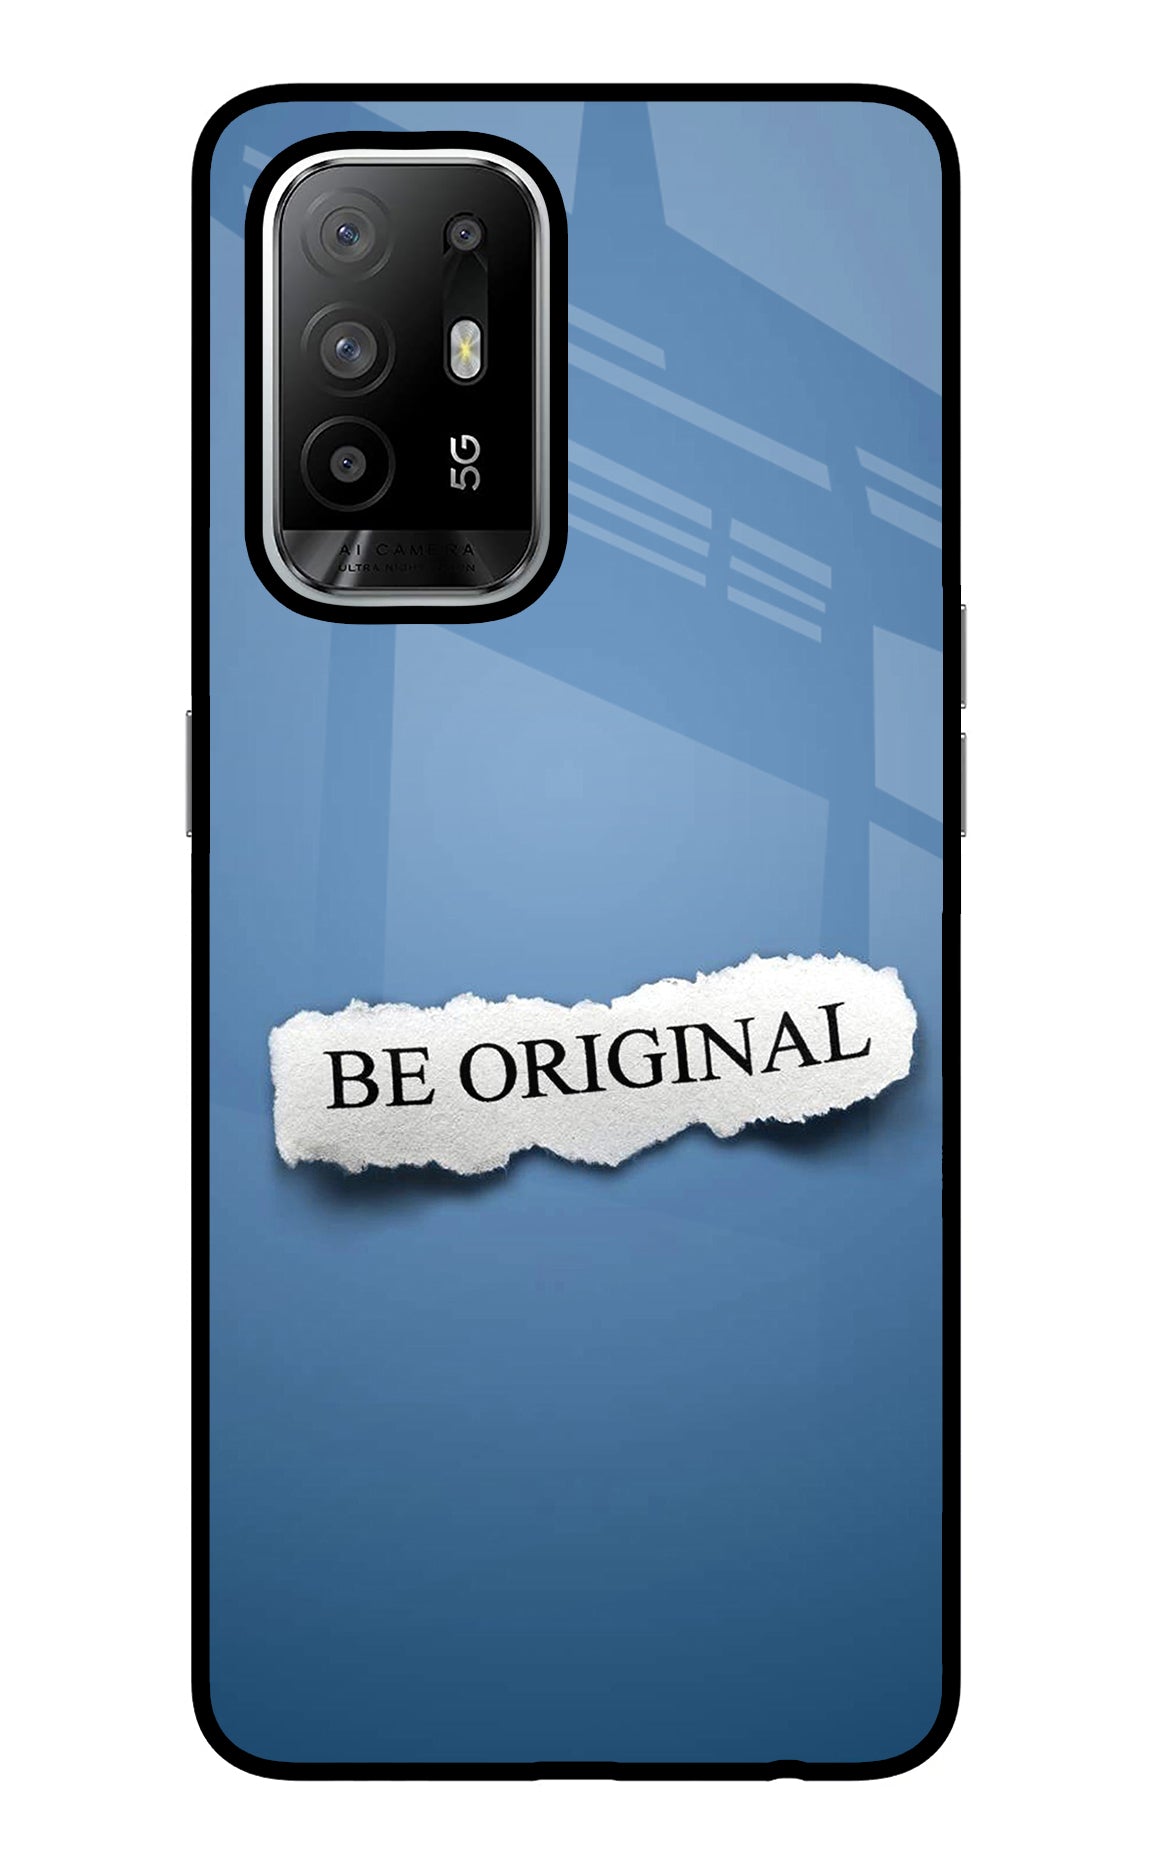 Be Original Oppo F19 Pro+ Back Cover